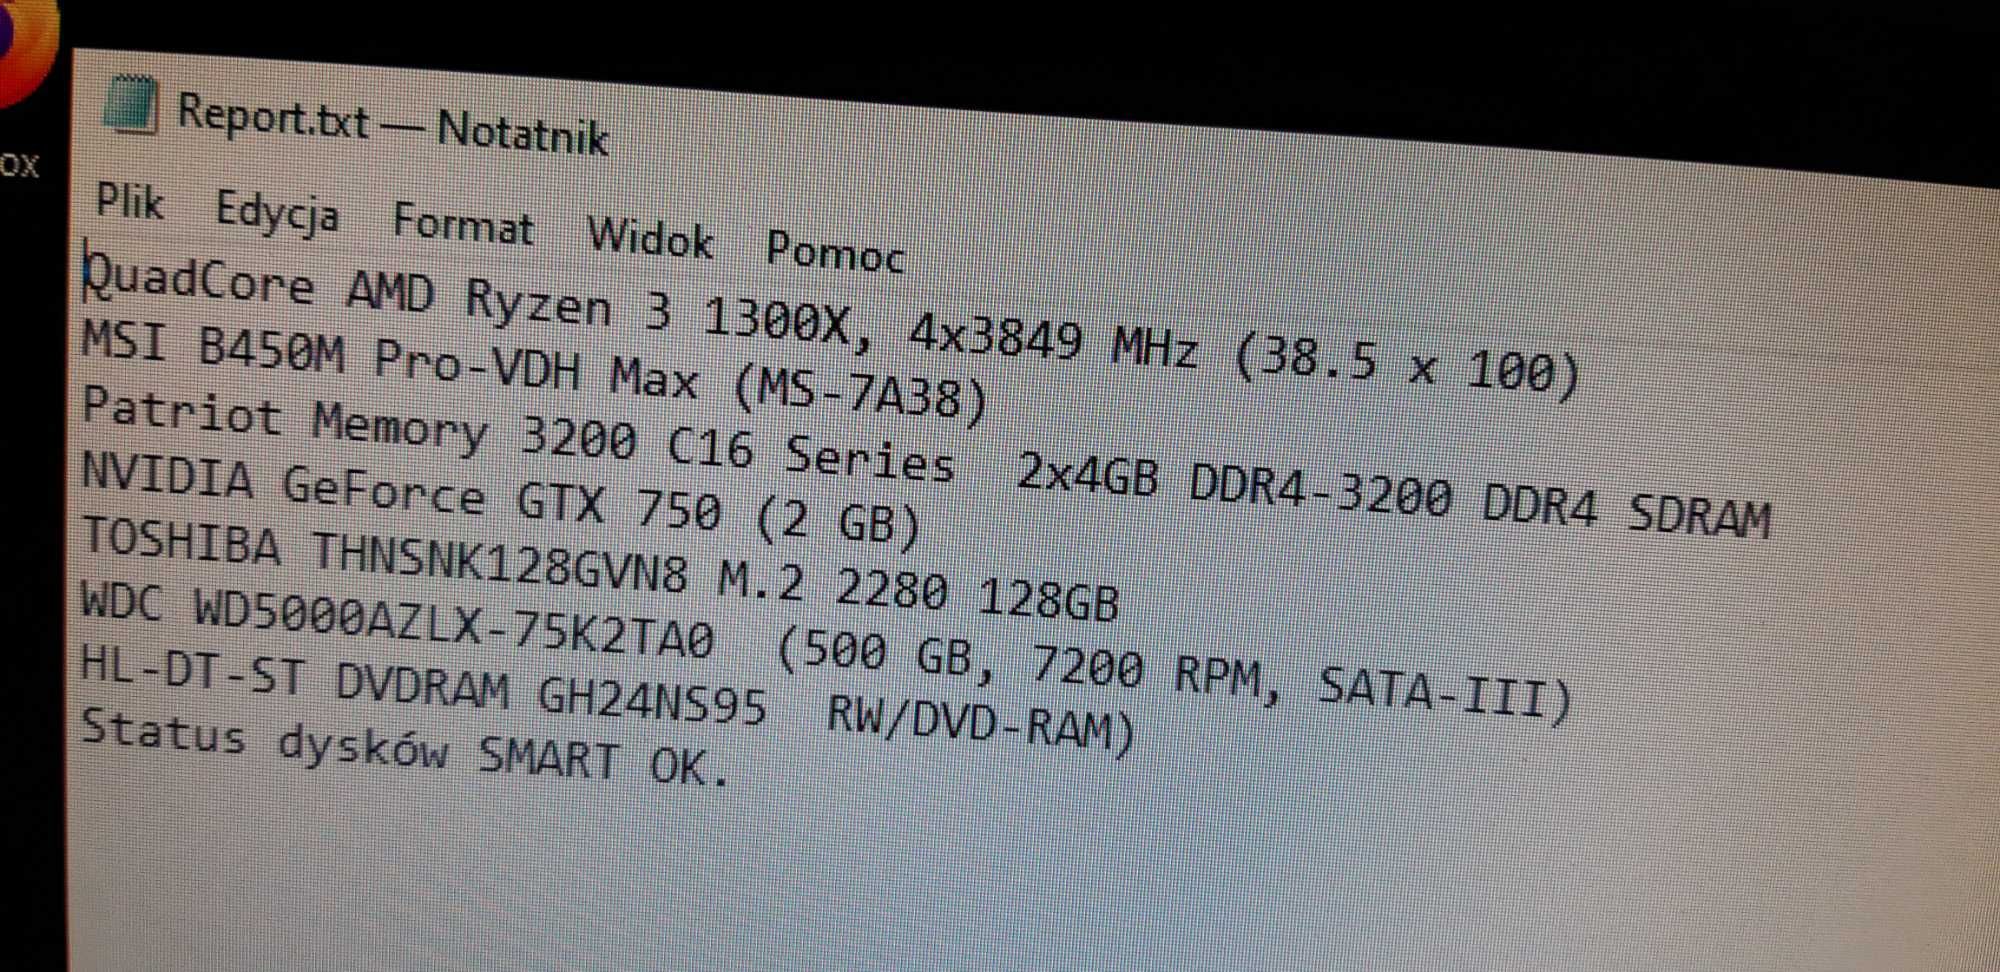 Komputer RYZEN 3, 128GB M2, 8GB RAM, GTX 750, GRATIS